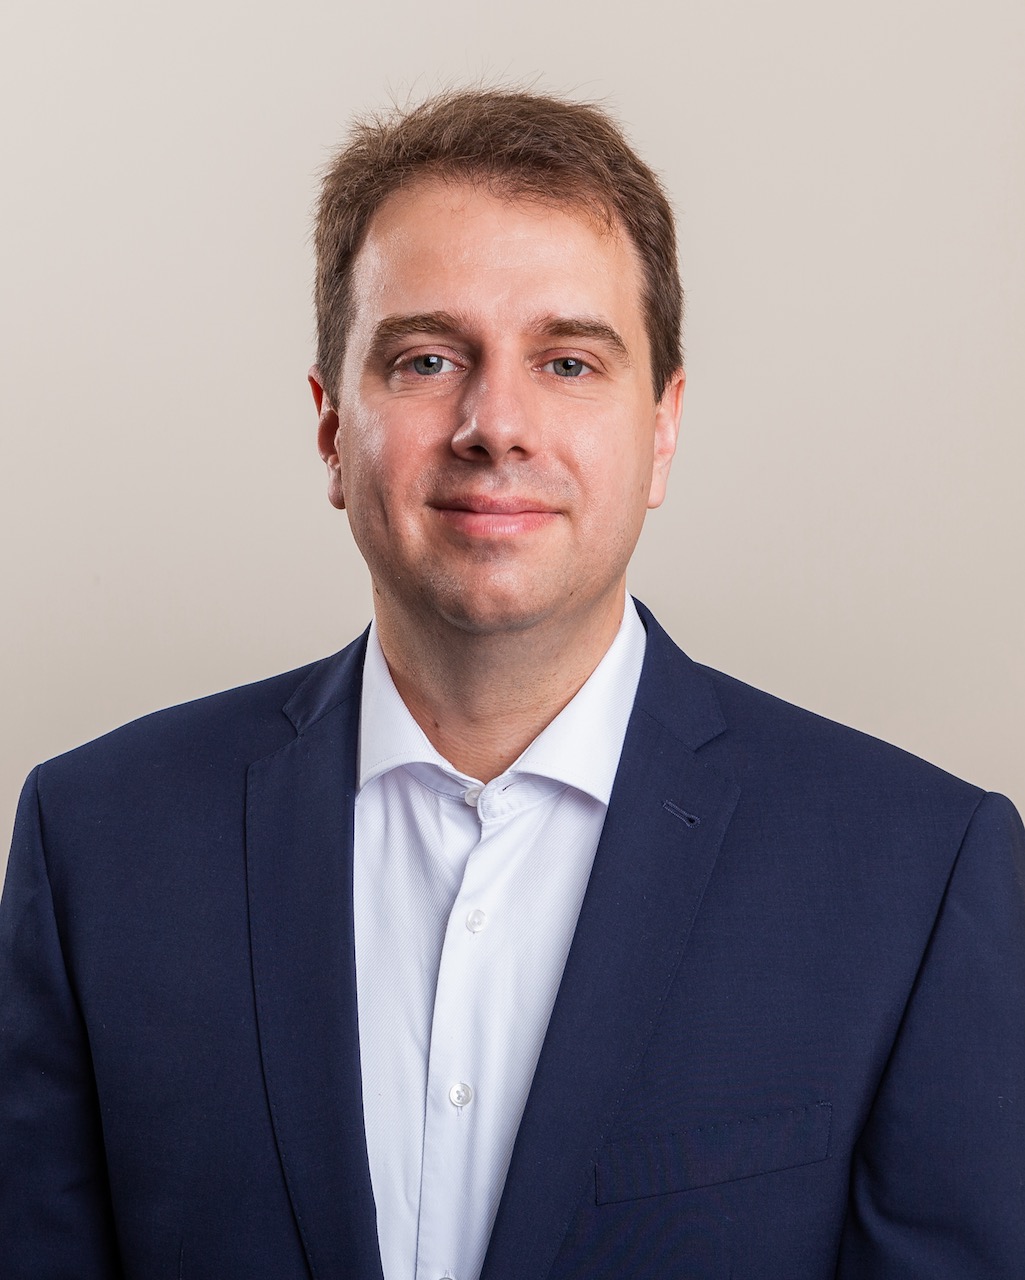 Richárd Révész Appointed Marketing Manager of Danone Hungary